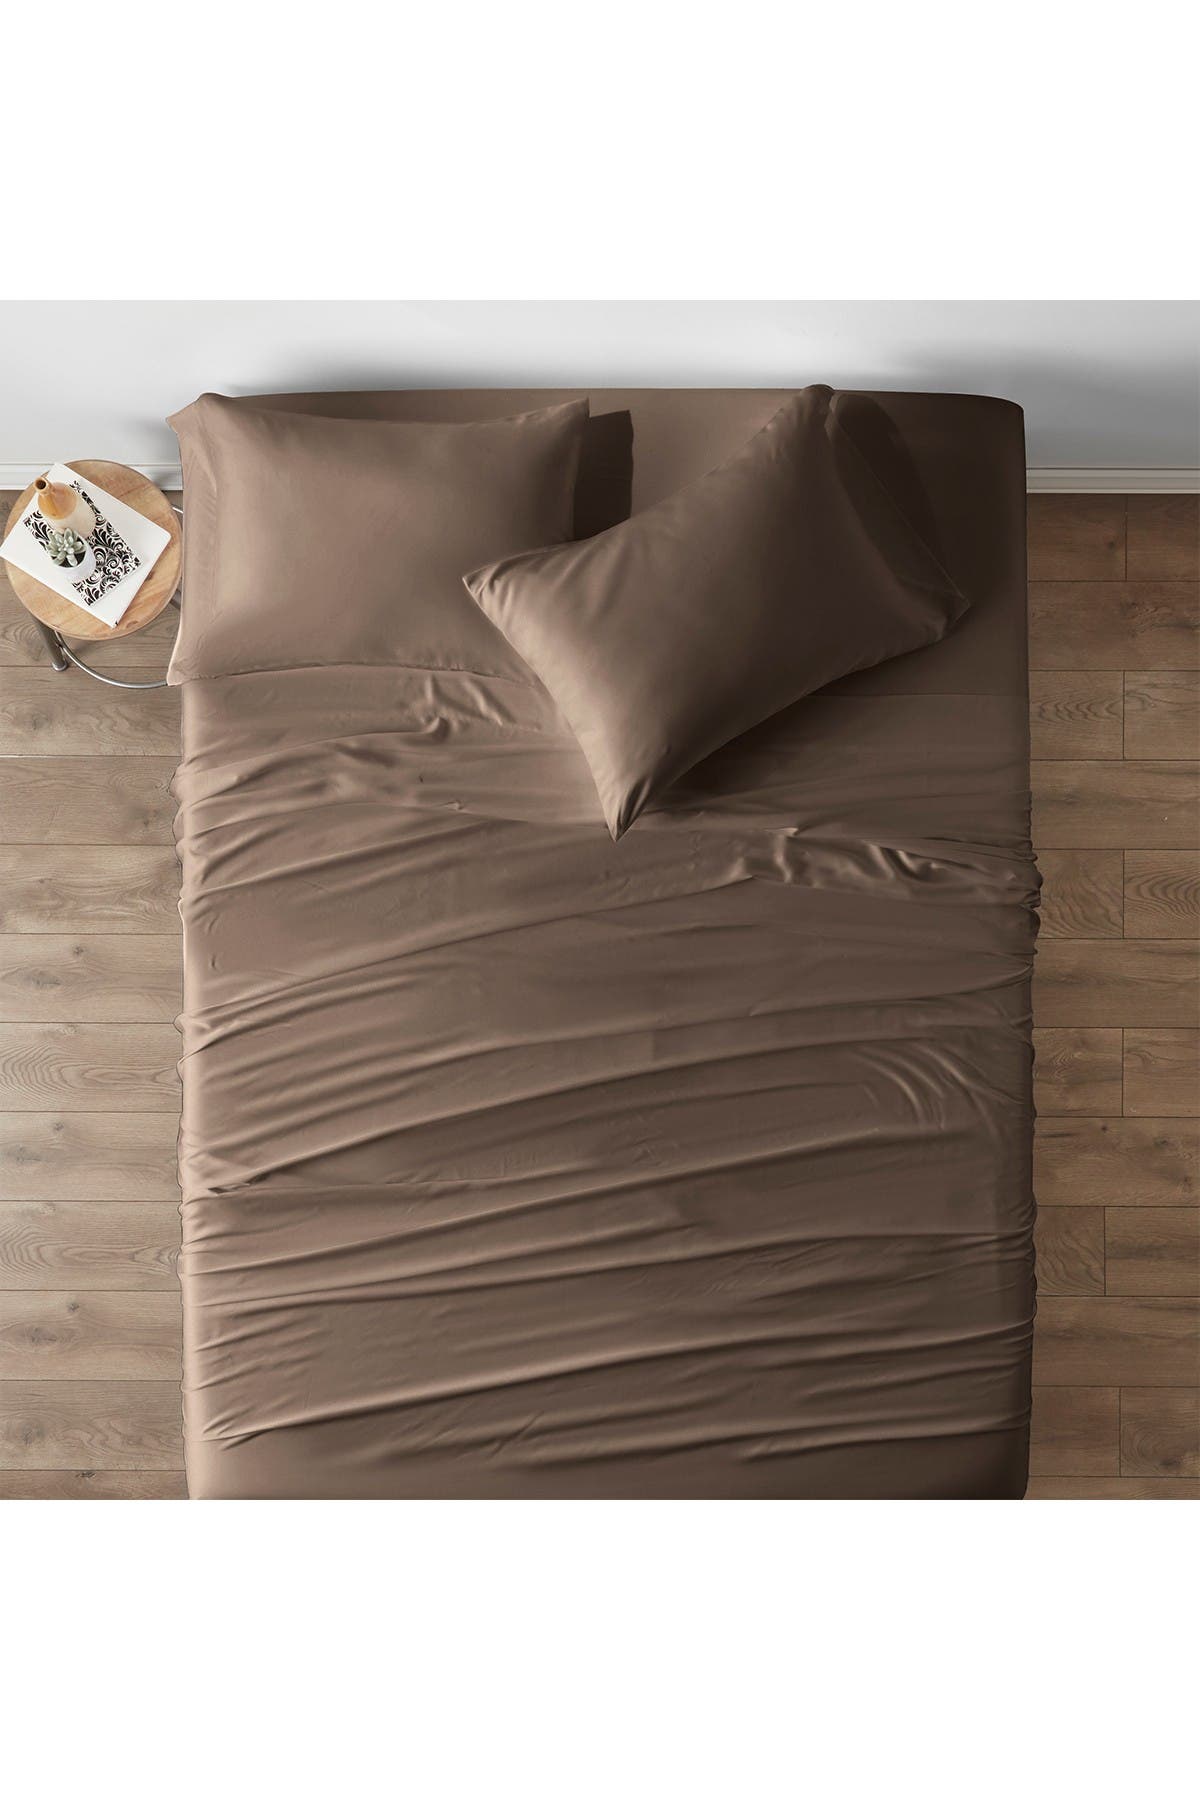 Ienjoy Home The Home Spun Brown 4-piece Luxury Bed Sheet Set In Medium Brown